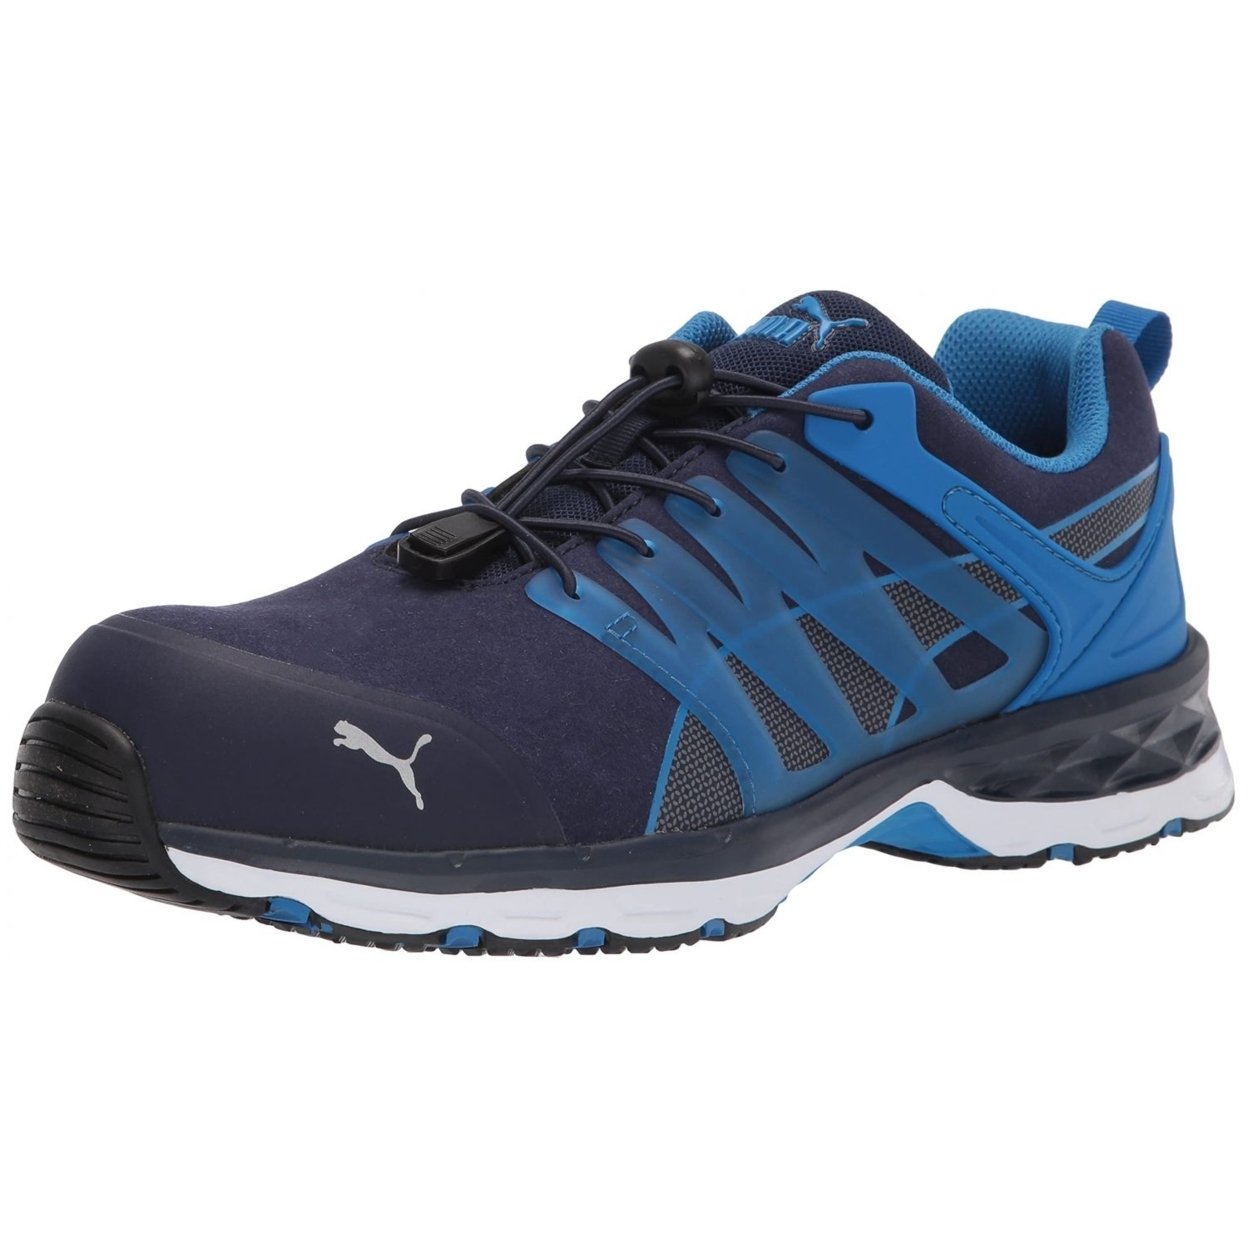 PUMA Safety Men's Velocity 2.0 Composite Toe ESD Work Shoe Blue - 643855 ONE SIZE BLUE - BLUE, 11.5